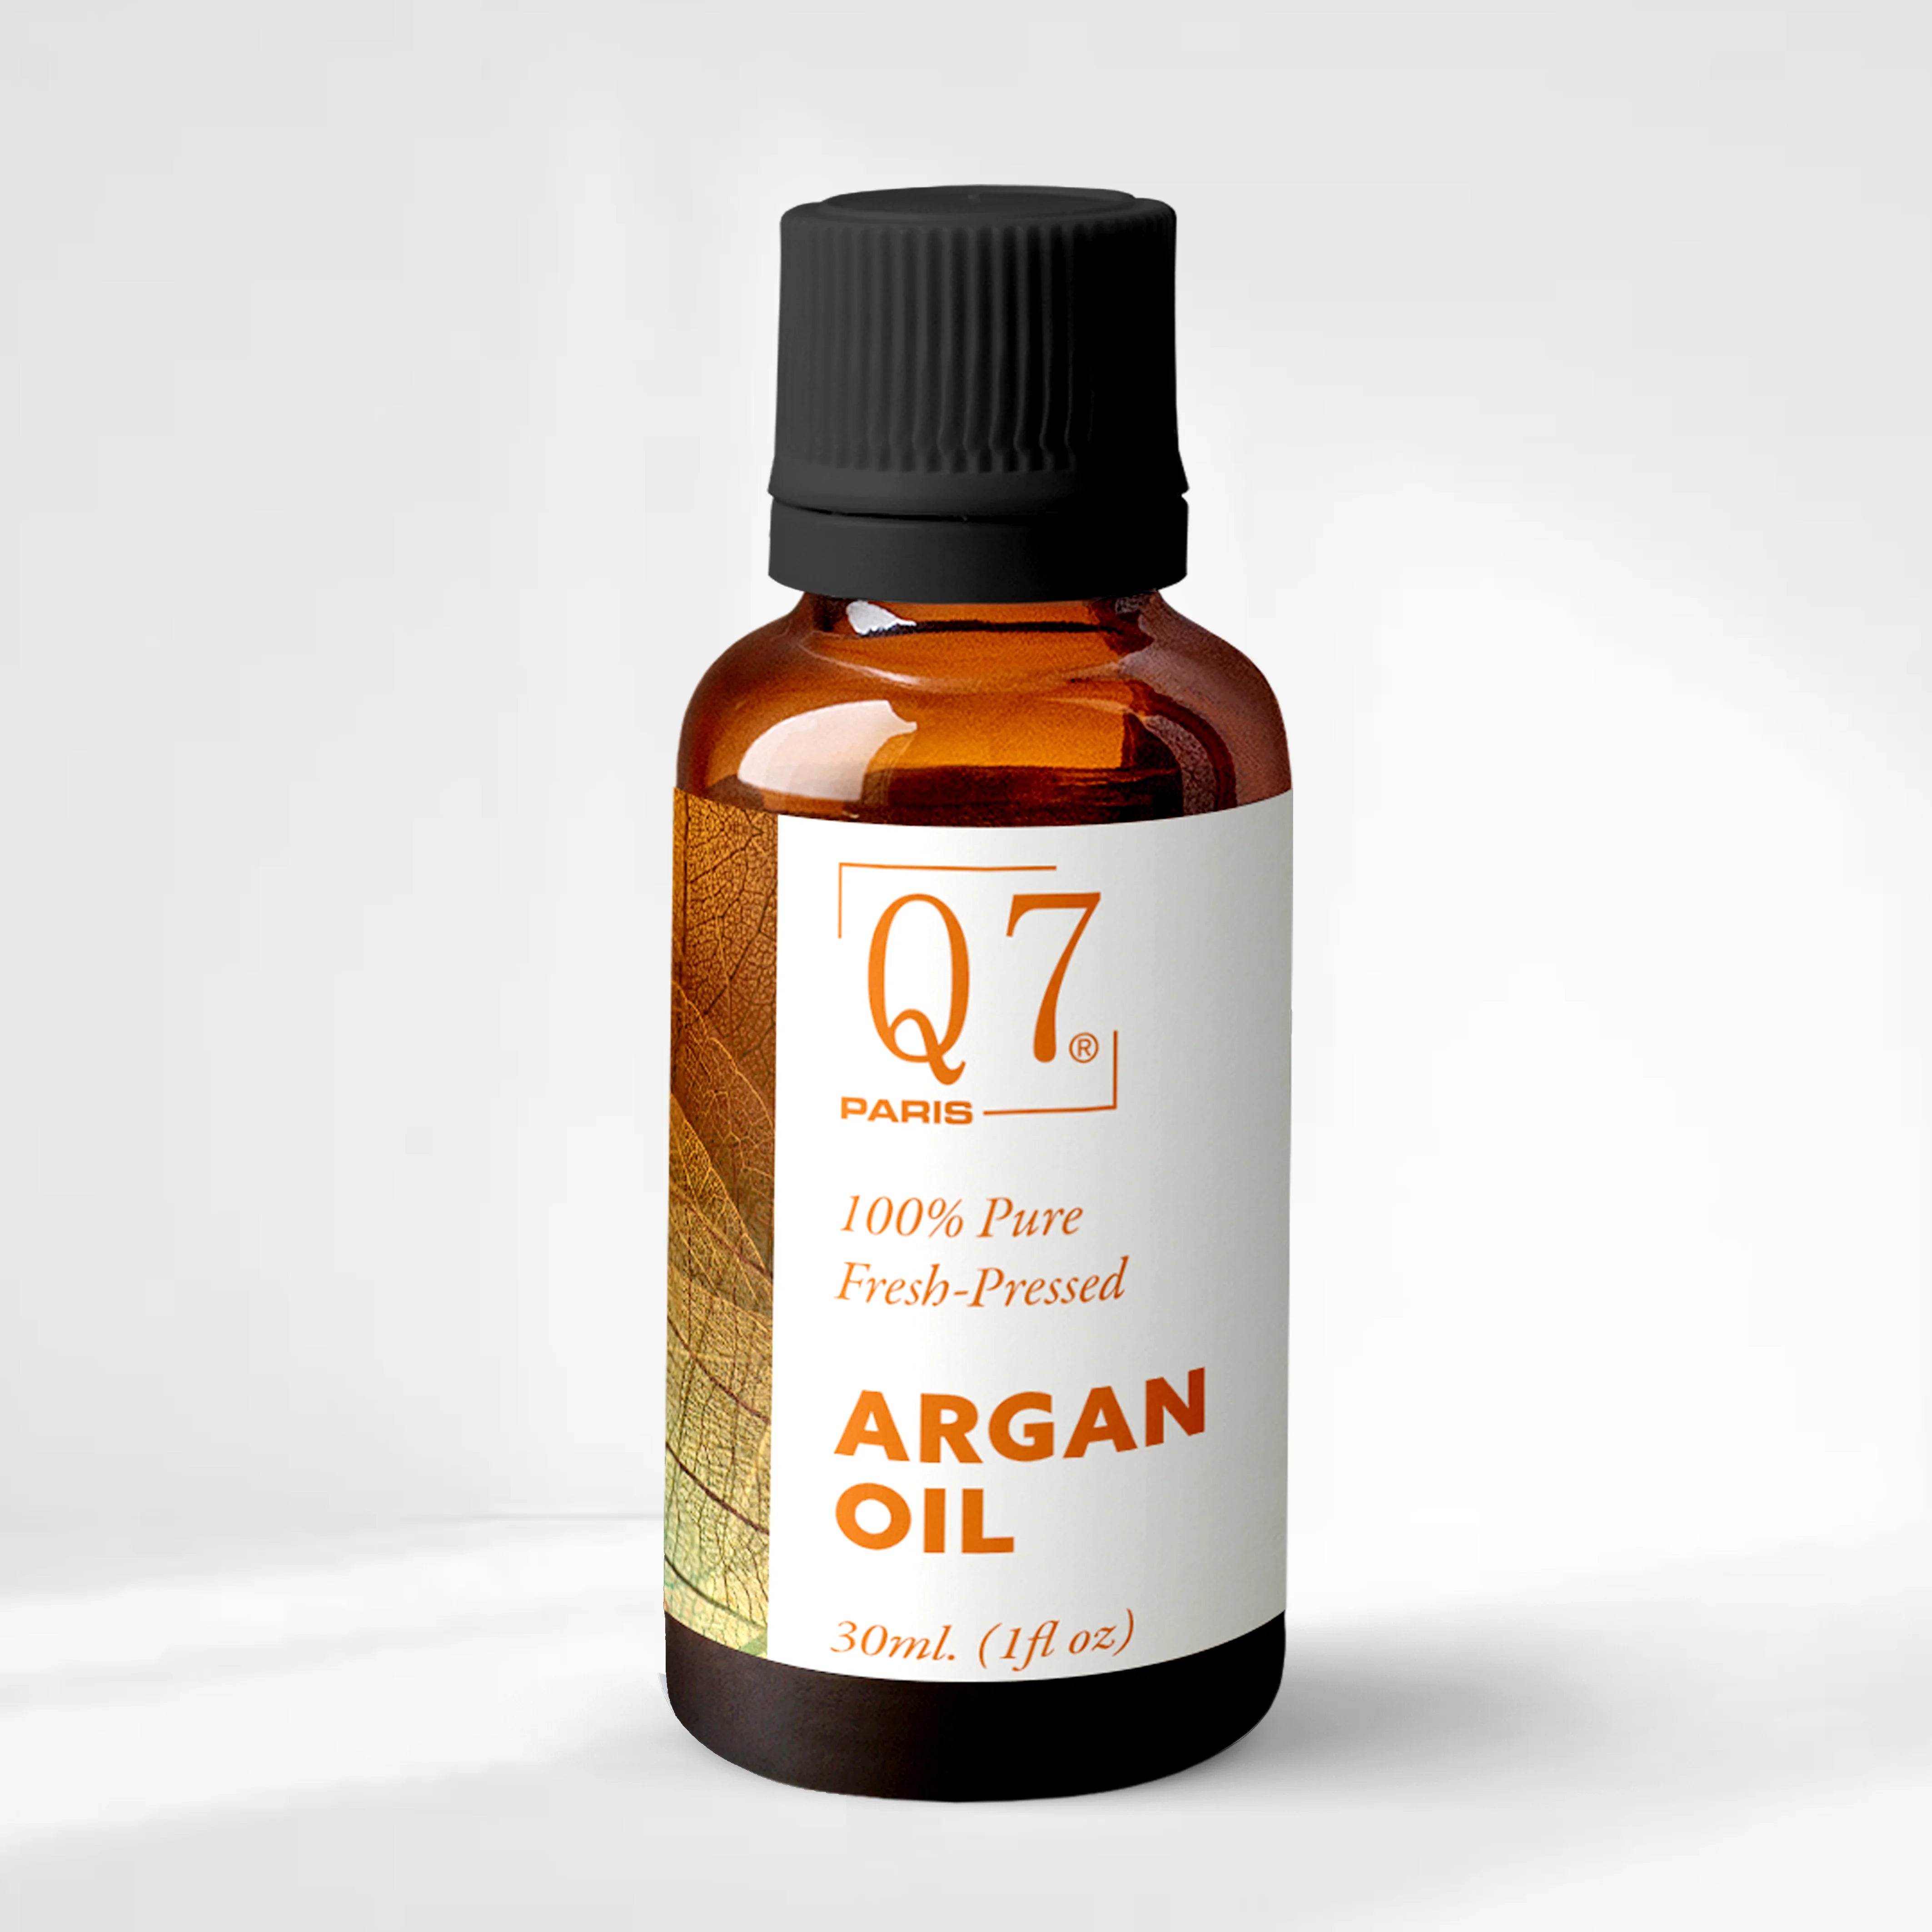 100% Pure, Fresh-Pressed Argan Oil – 30ml